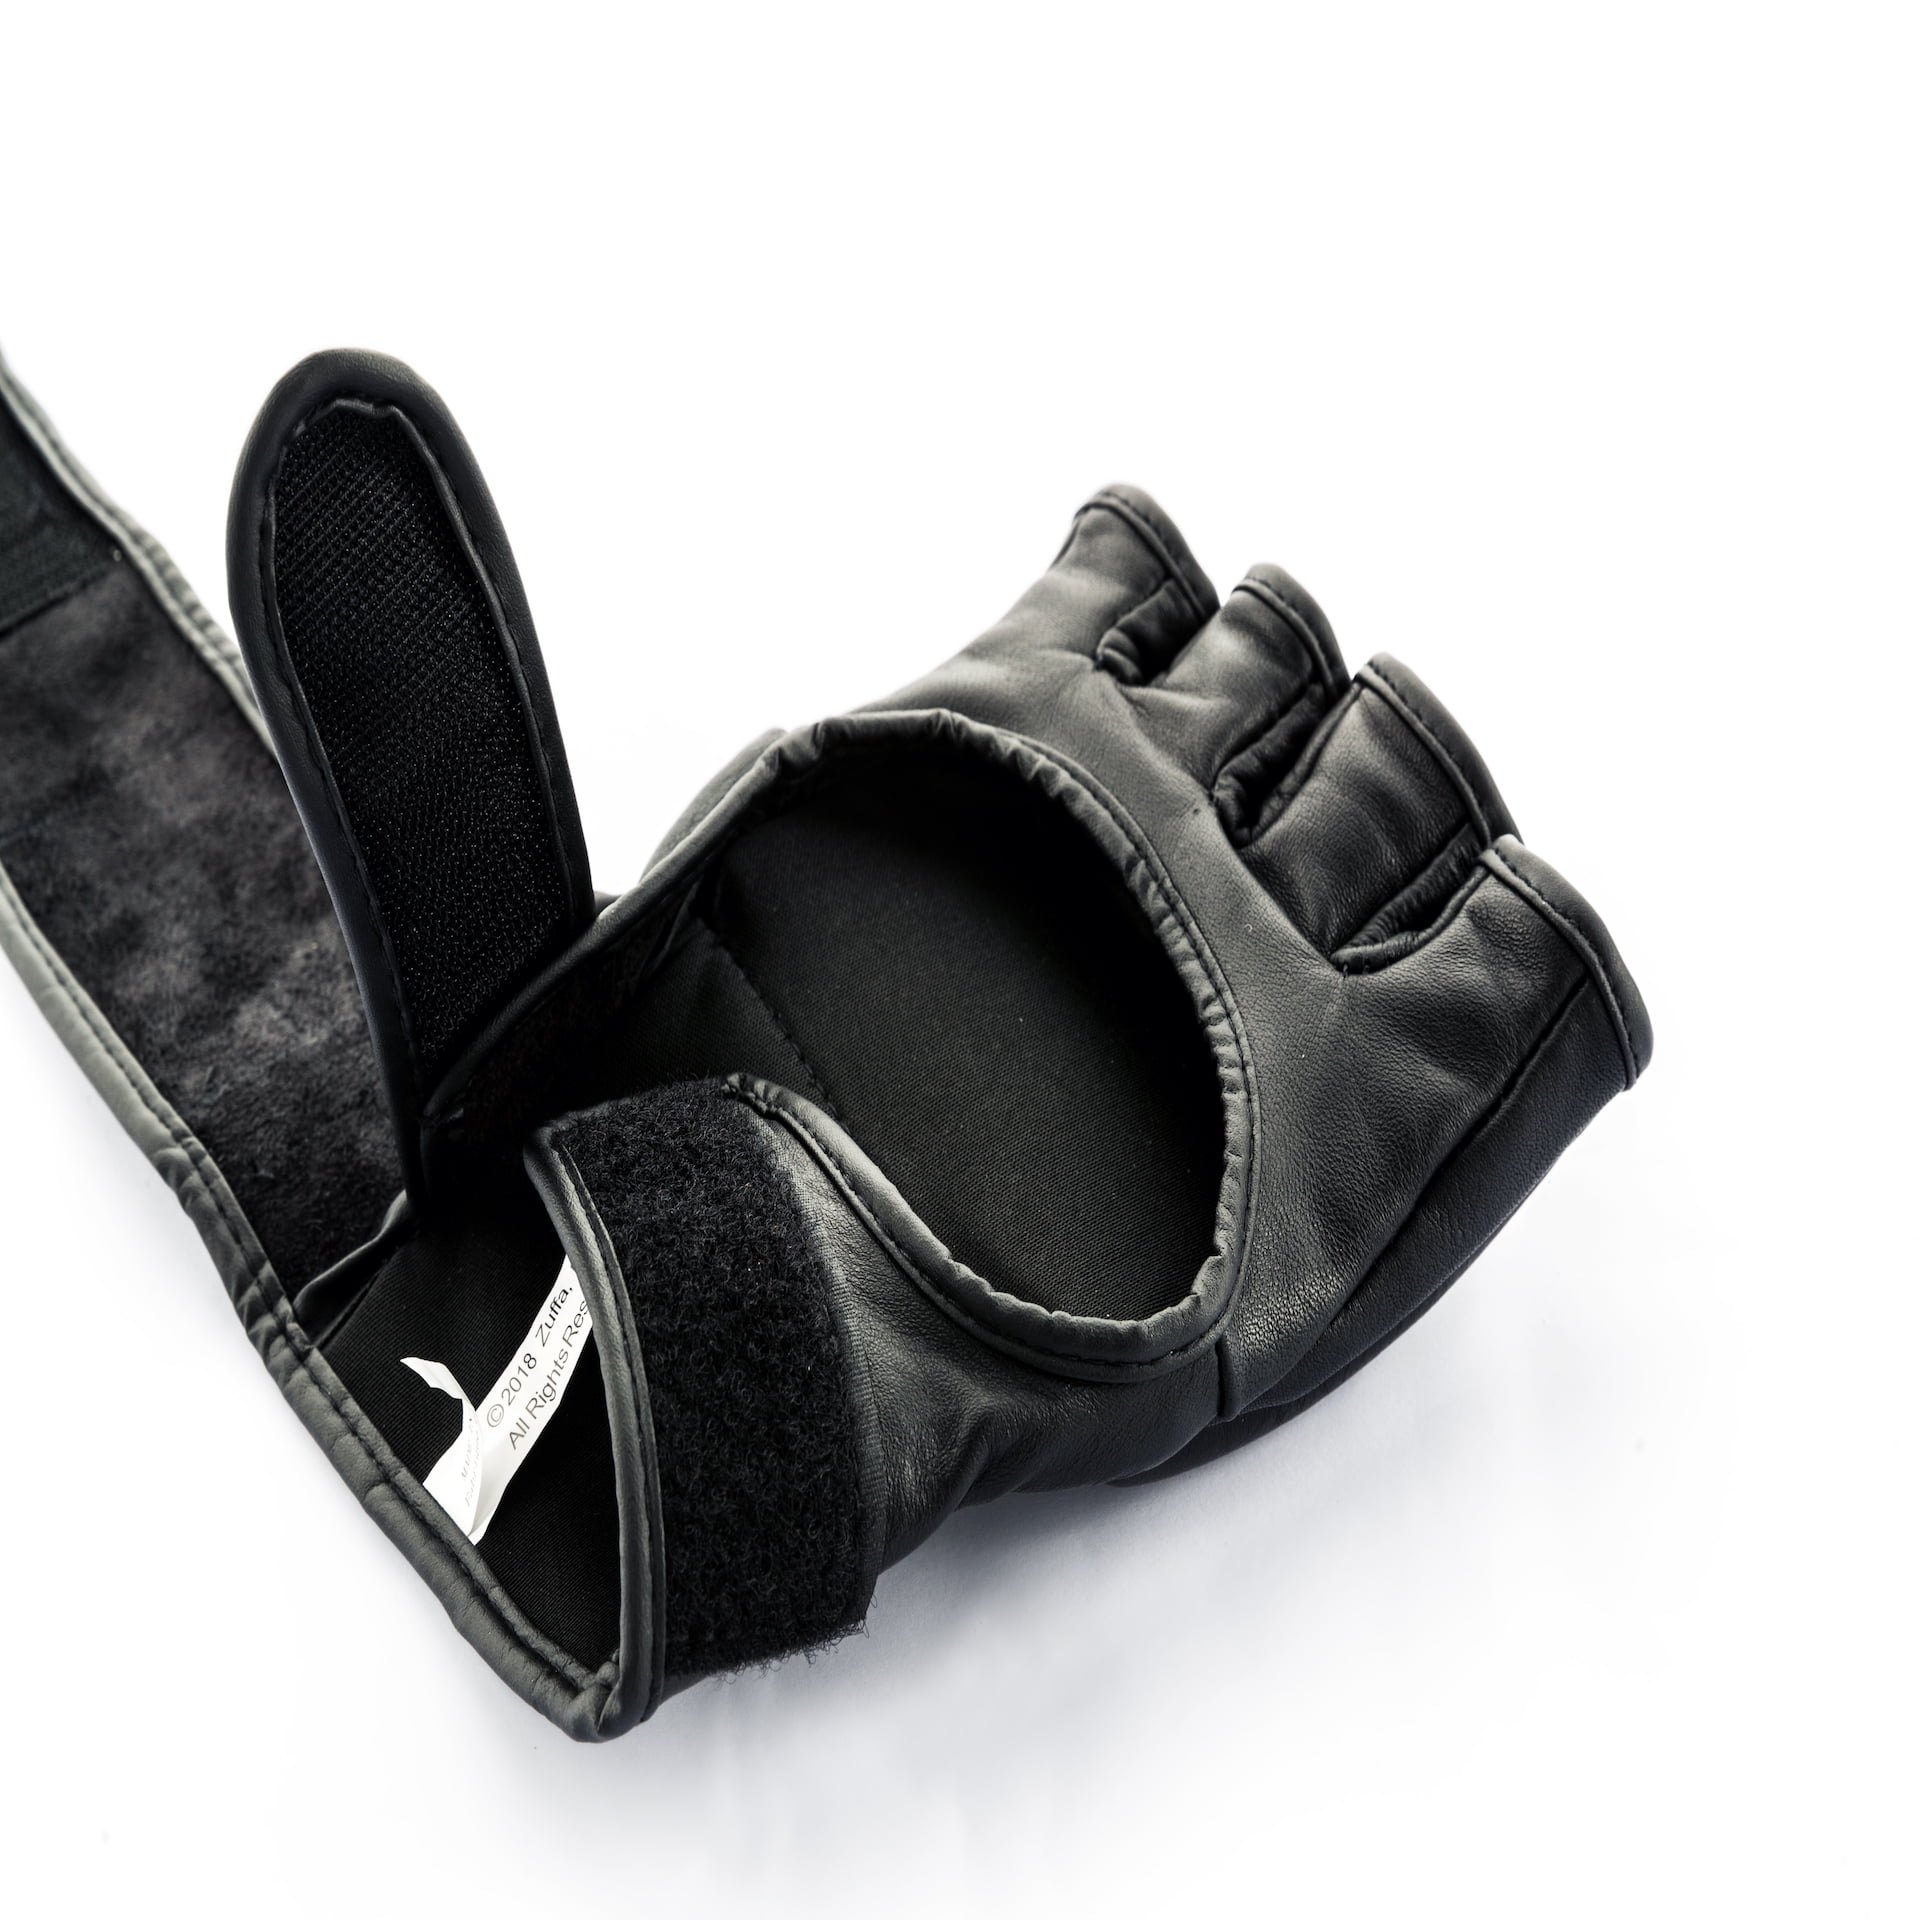 MATCH GRIP Free Fight Glove New model (01870-Black-White) - MMA